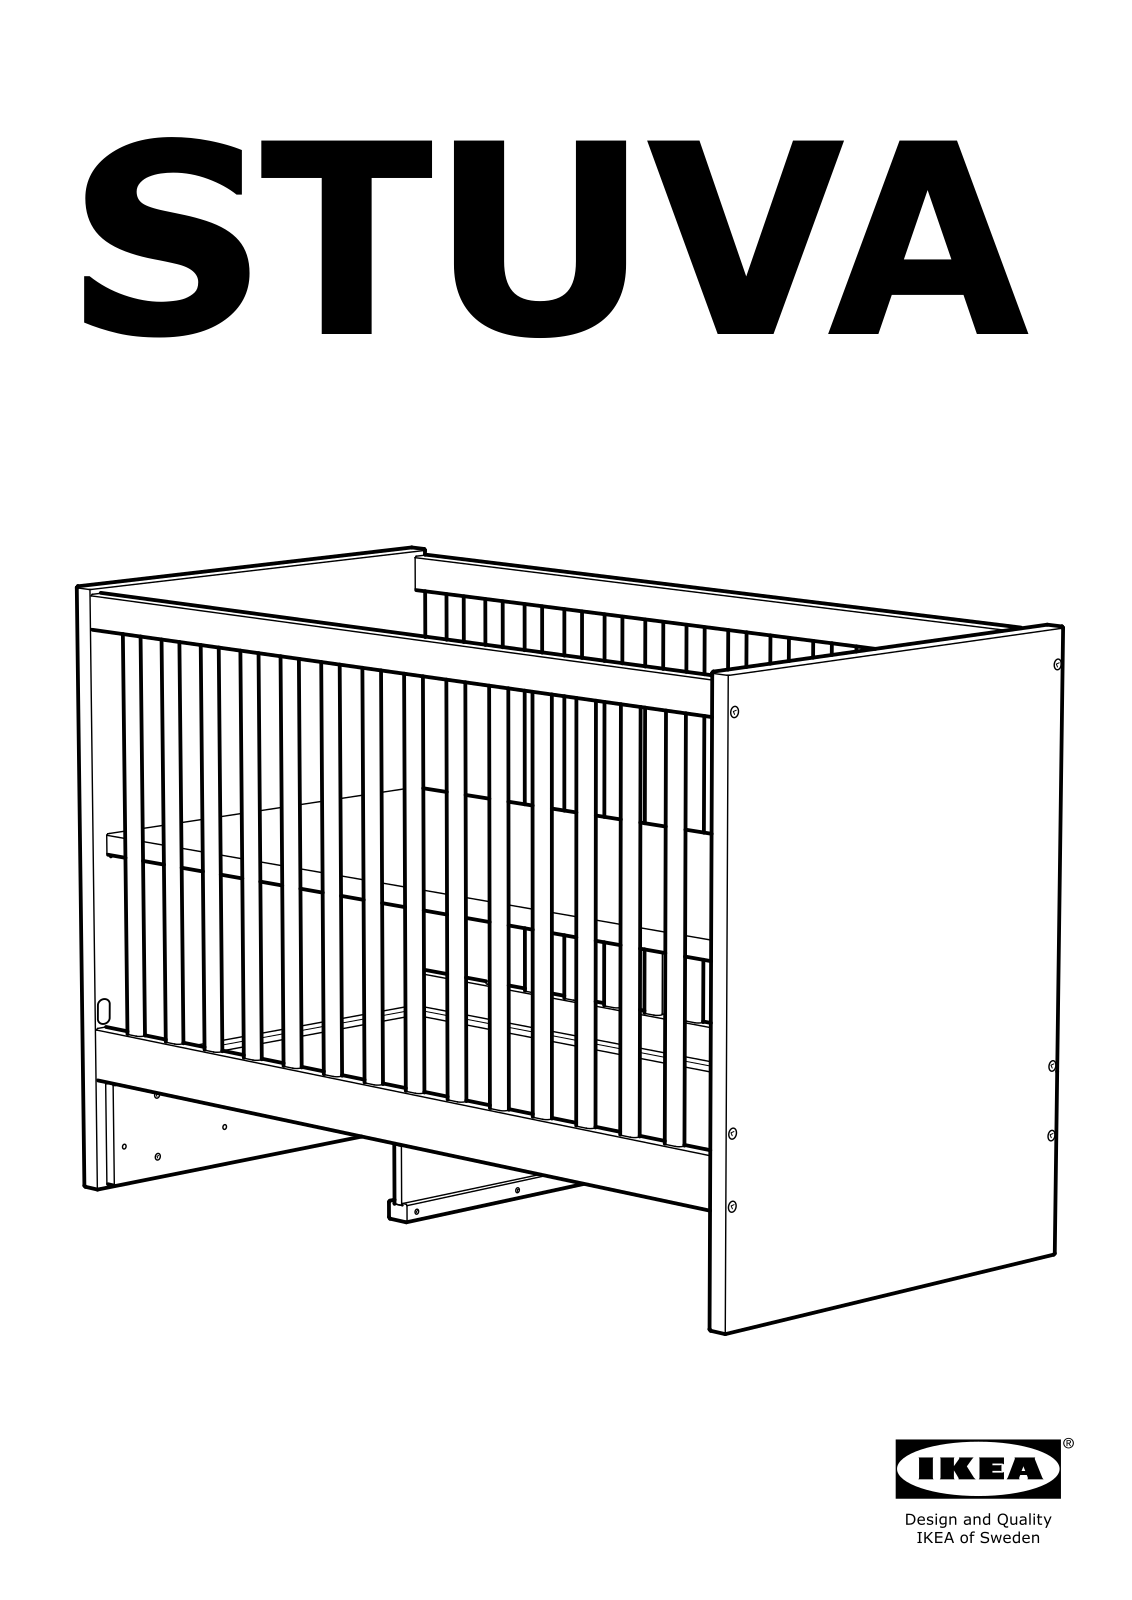 IKEA STUVA User Manual